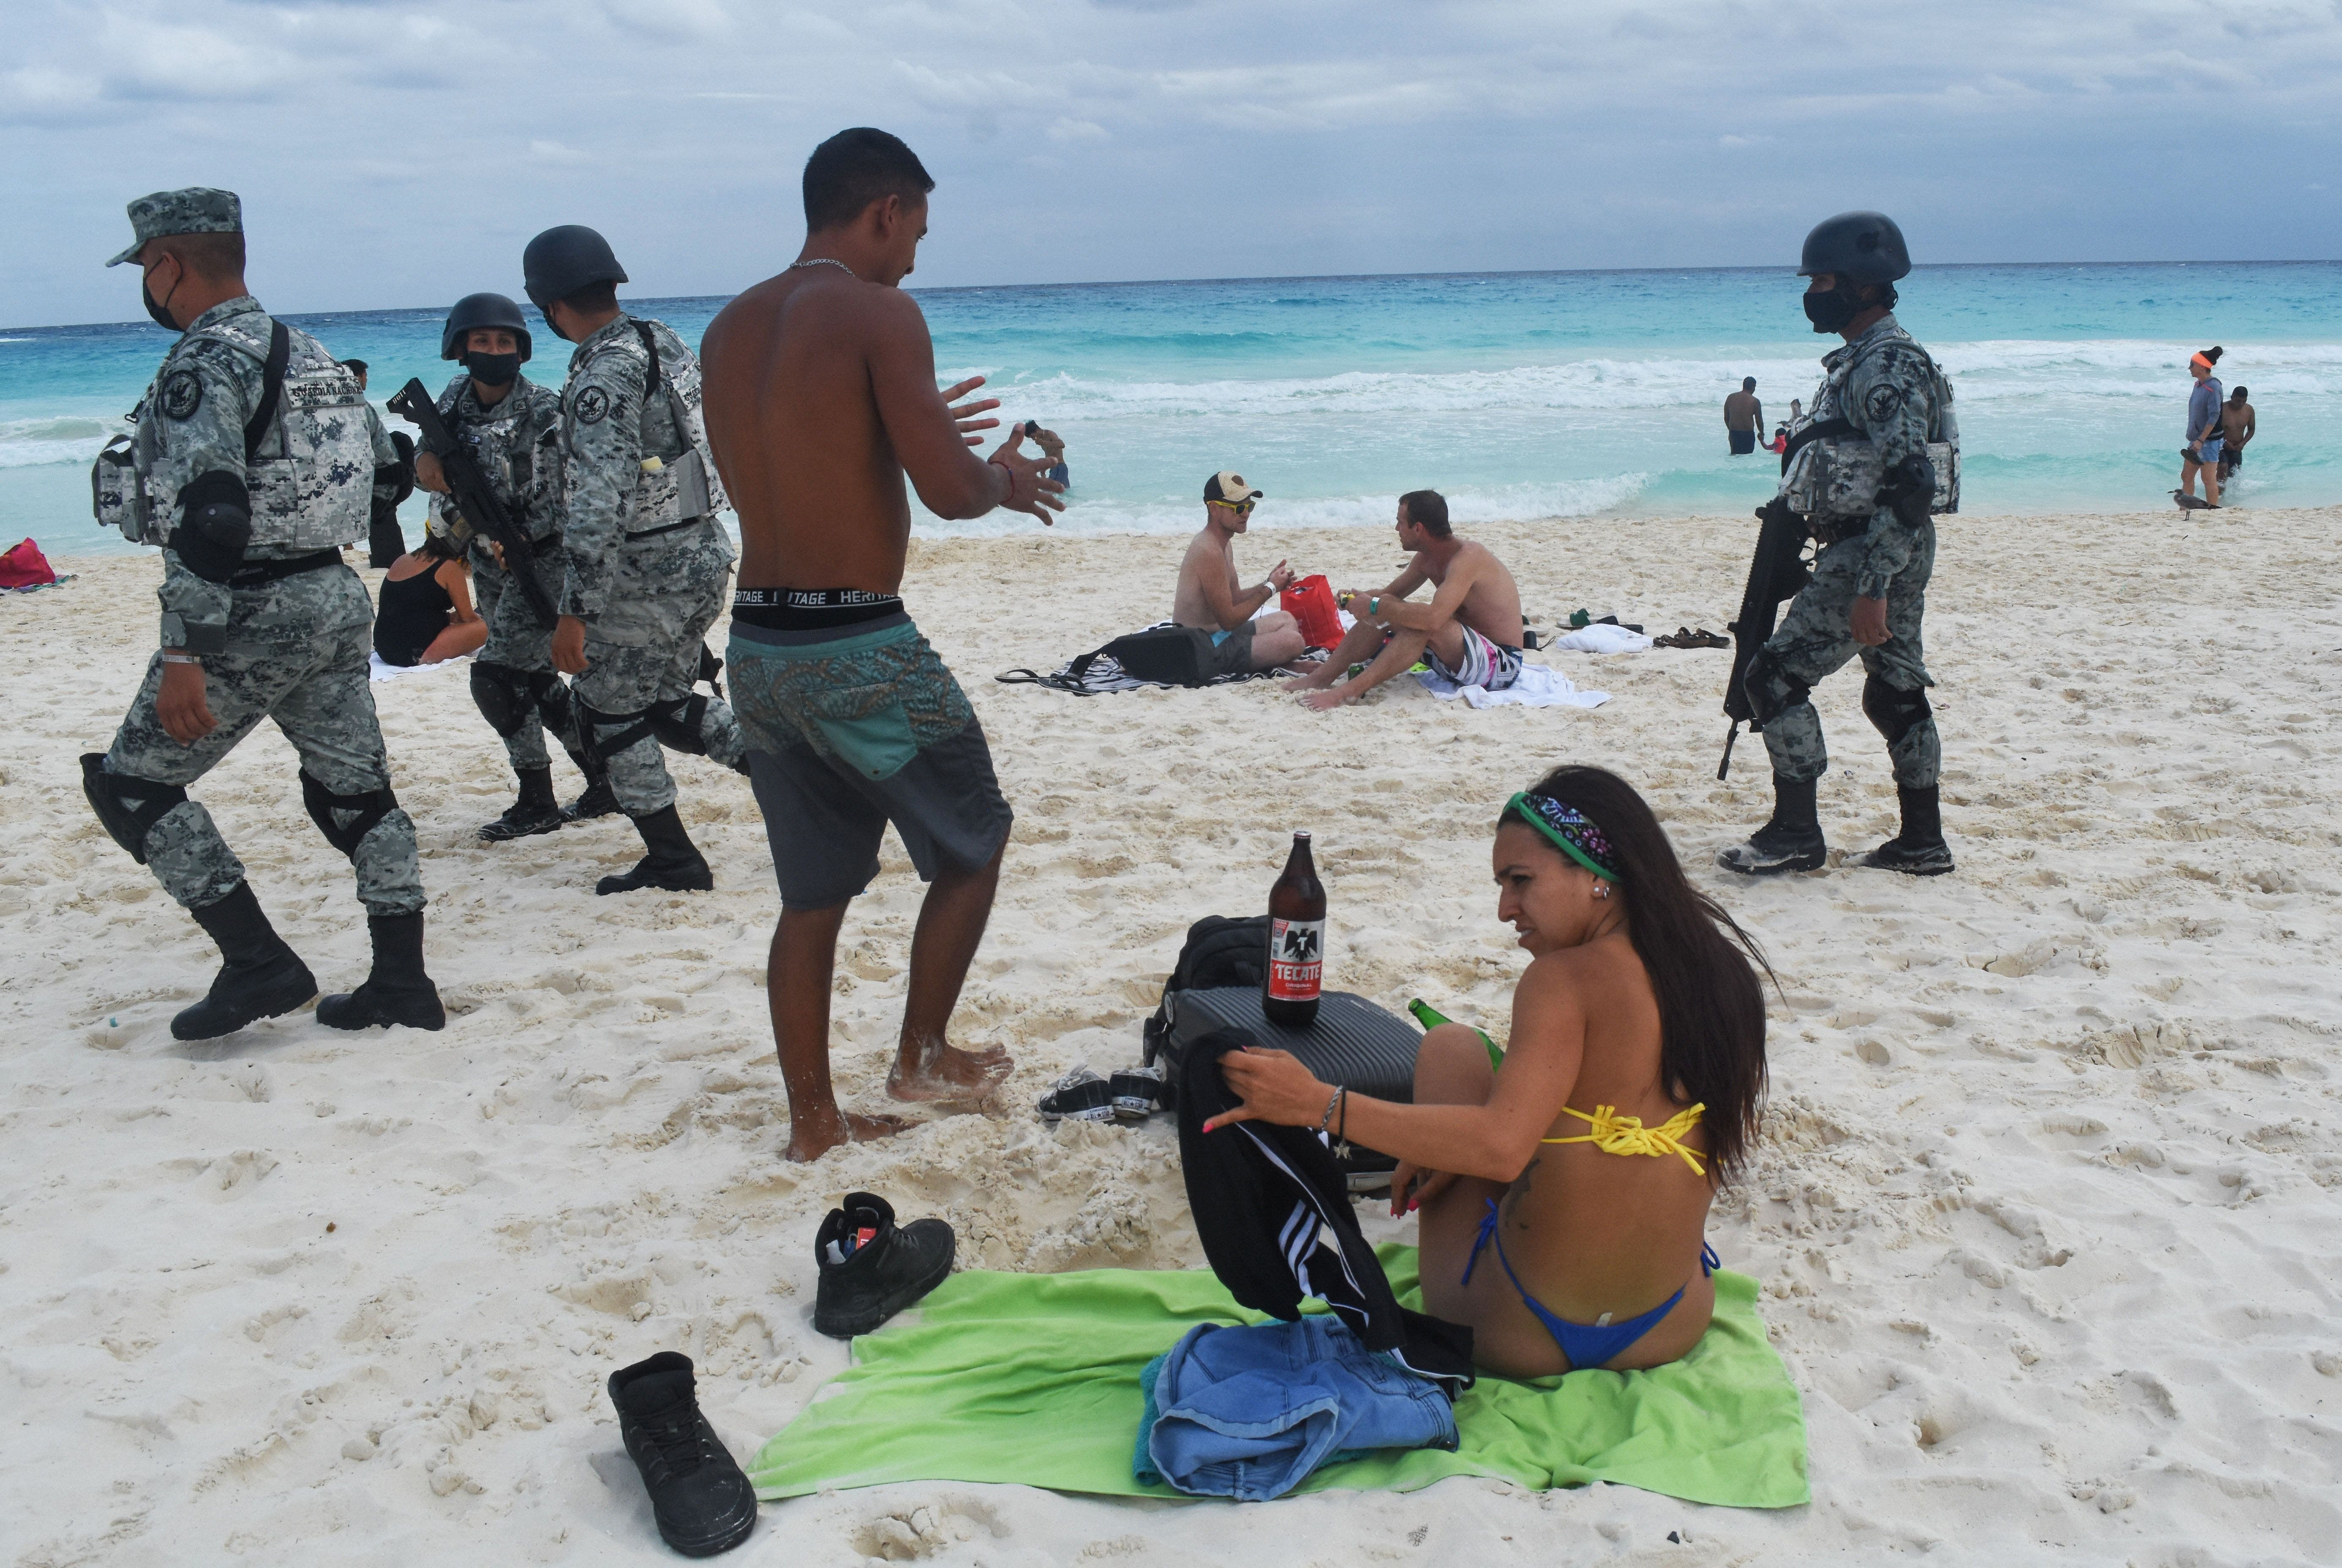 Alleged machete attack on American in Cancun highlights tourist